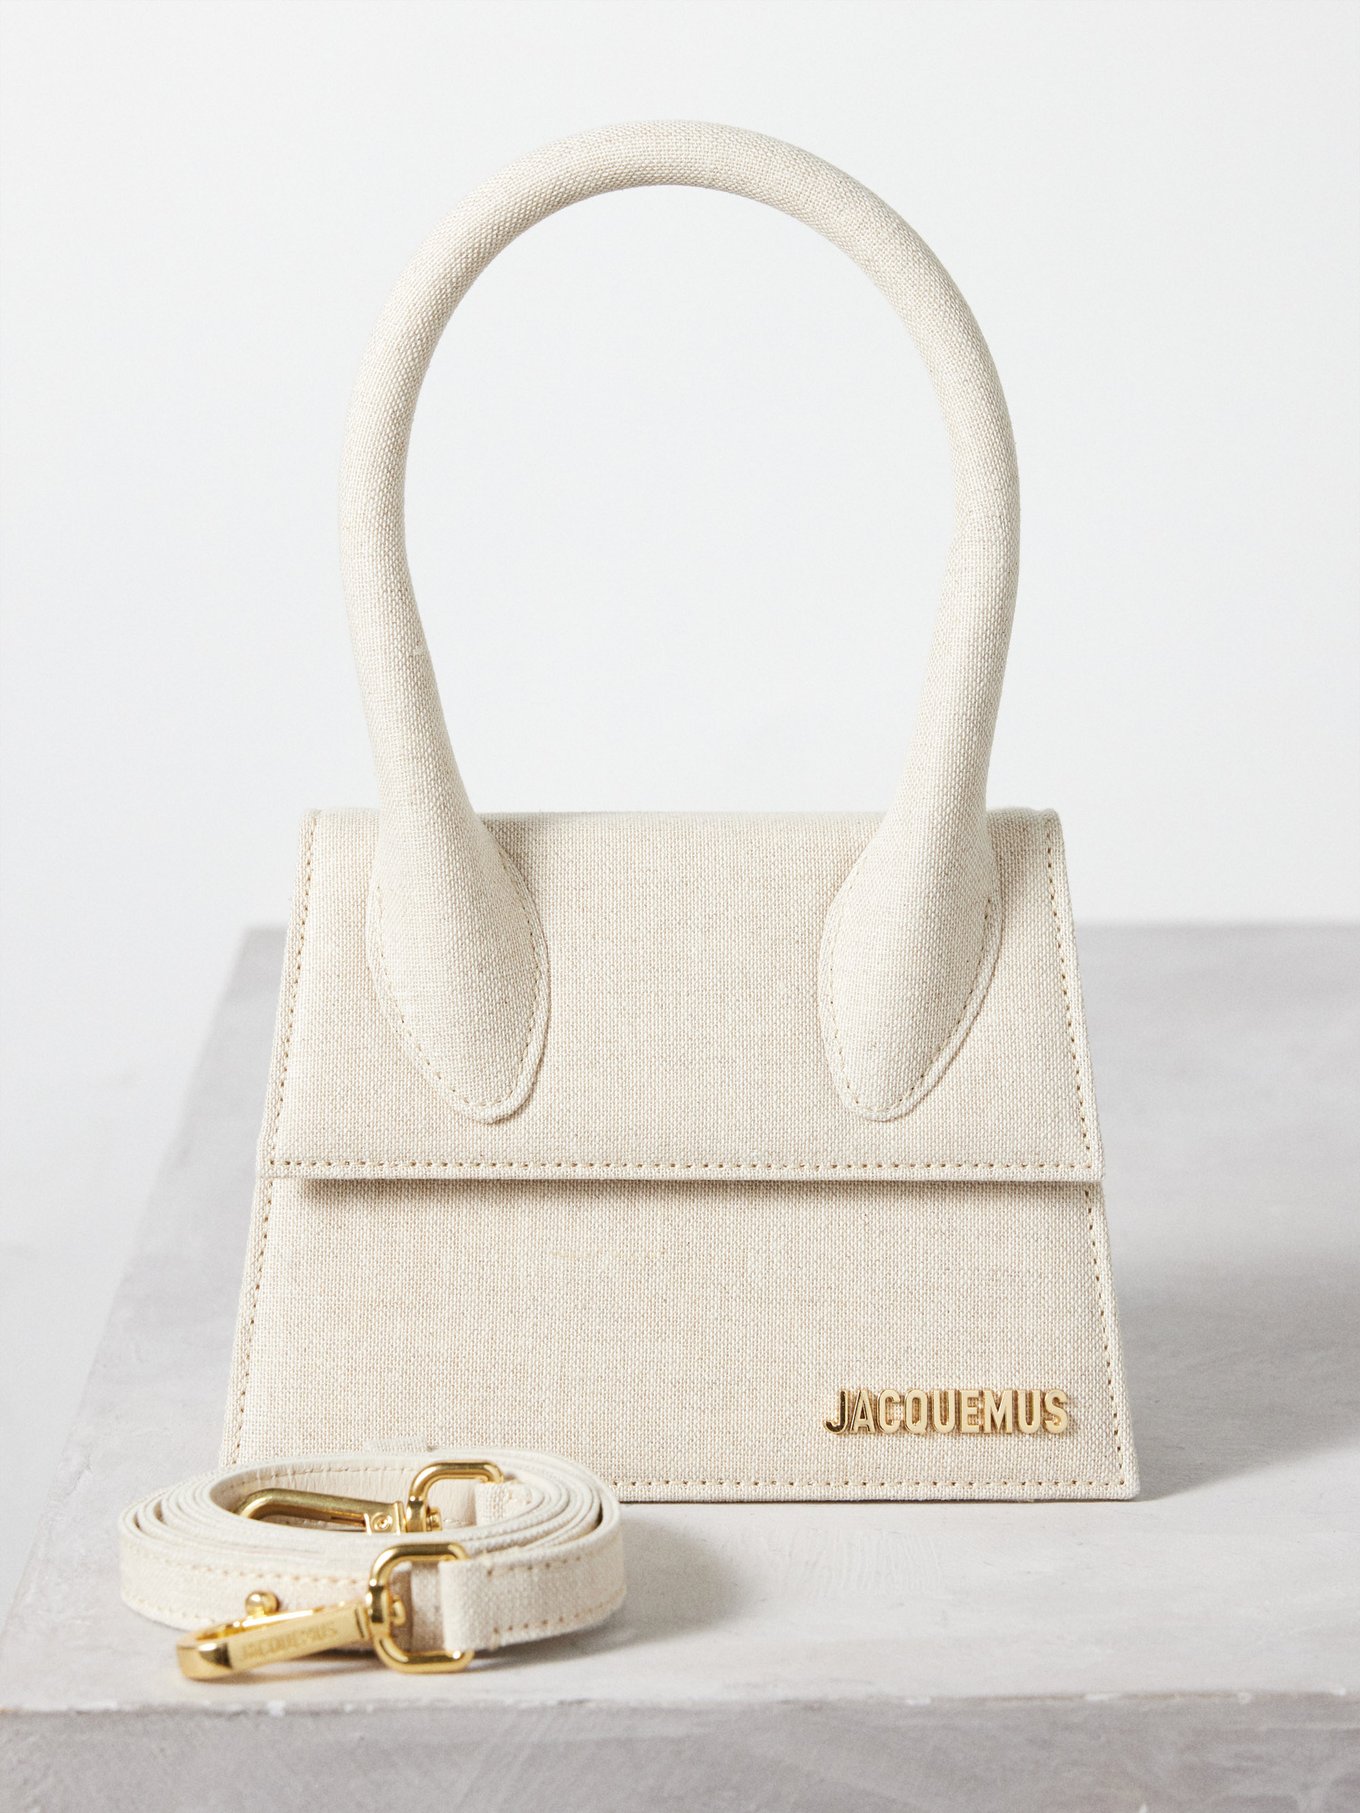 JACQUEMUS, Le Chiquito Moyen Bag, Women, Top Handle Bags